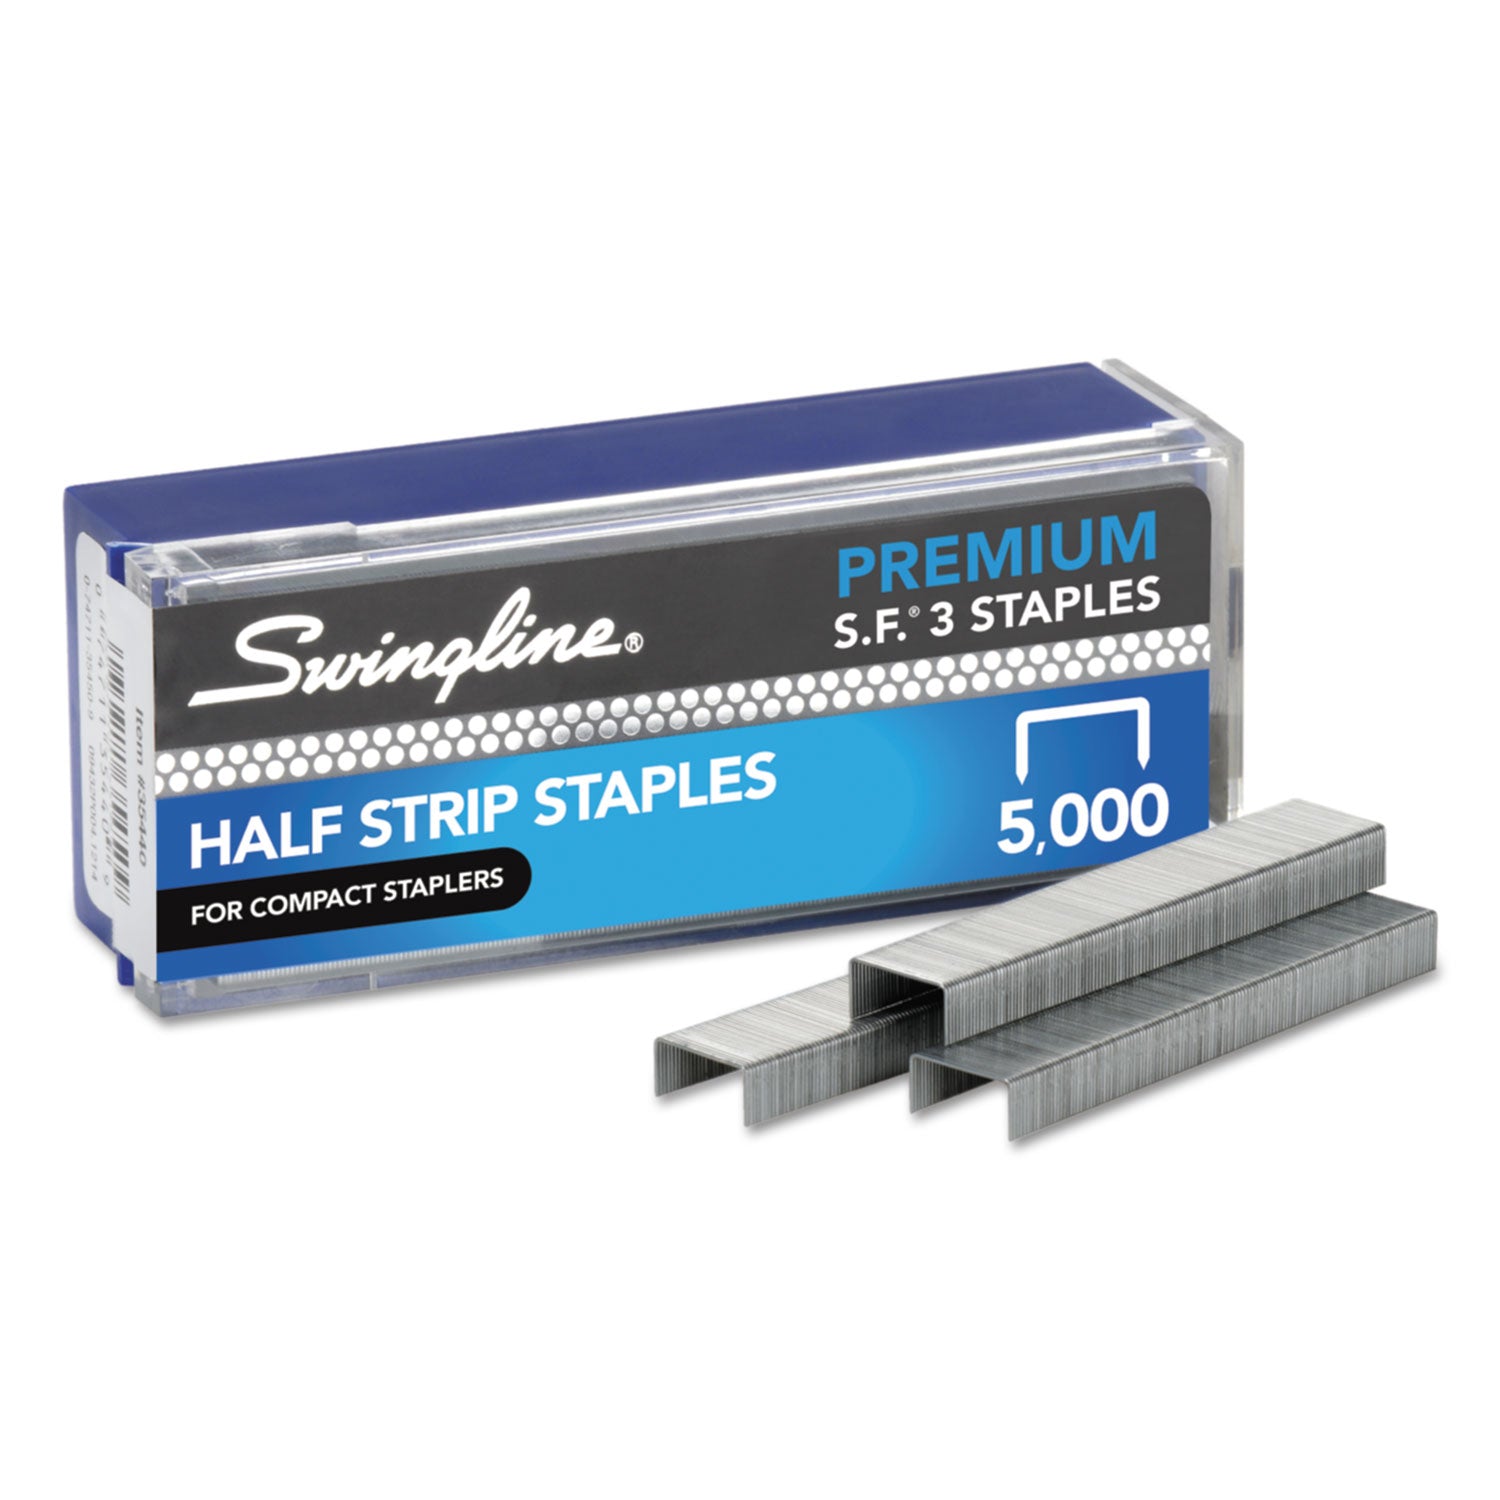 sf-3-premium-staples-025-leg-05-crown-steel-5000-box_swi35440 - 1